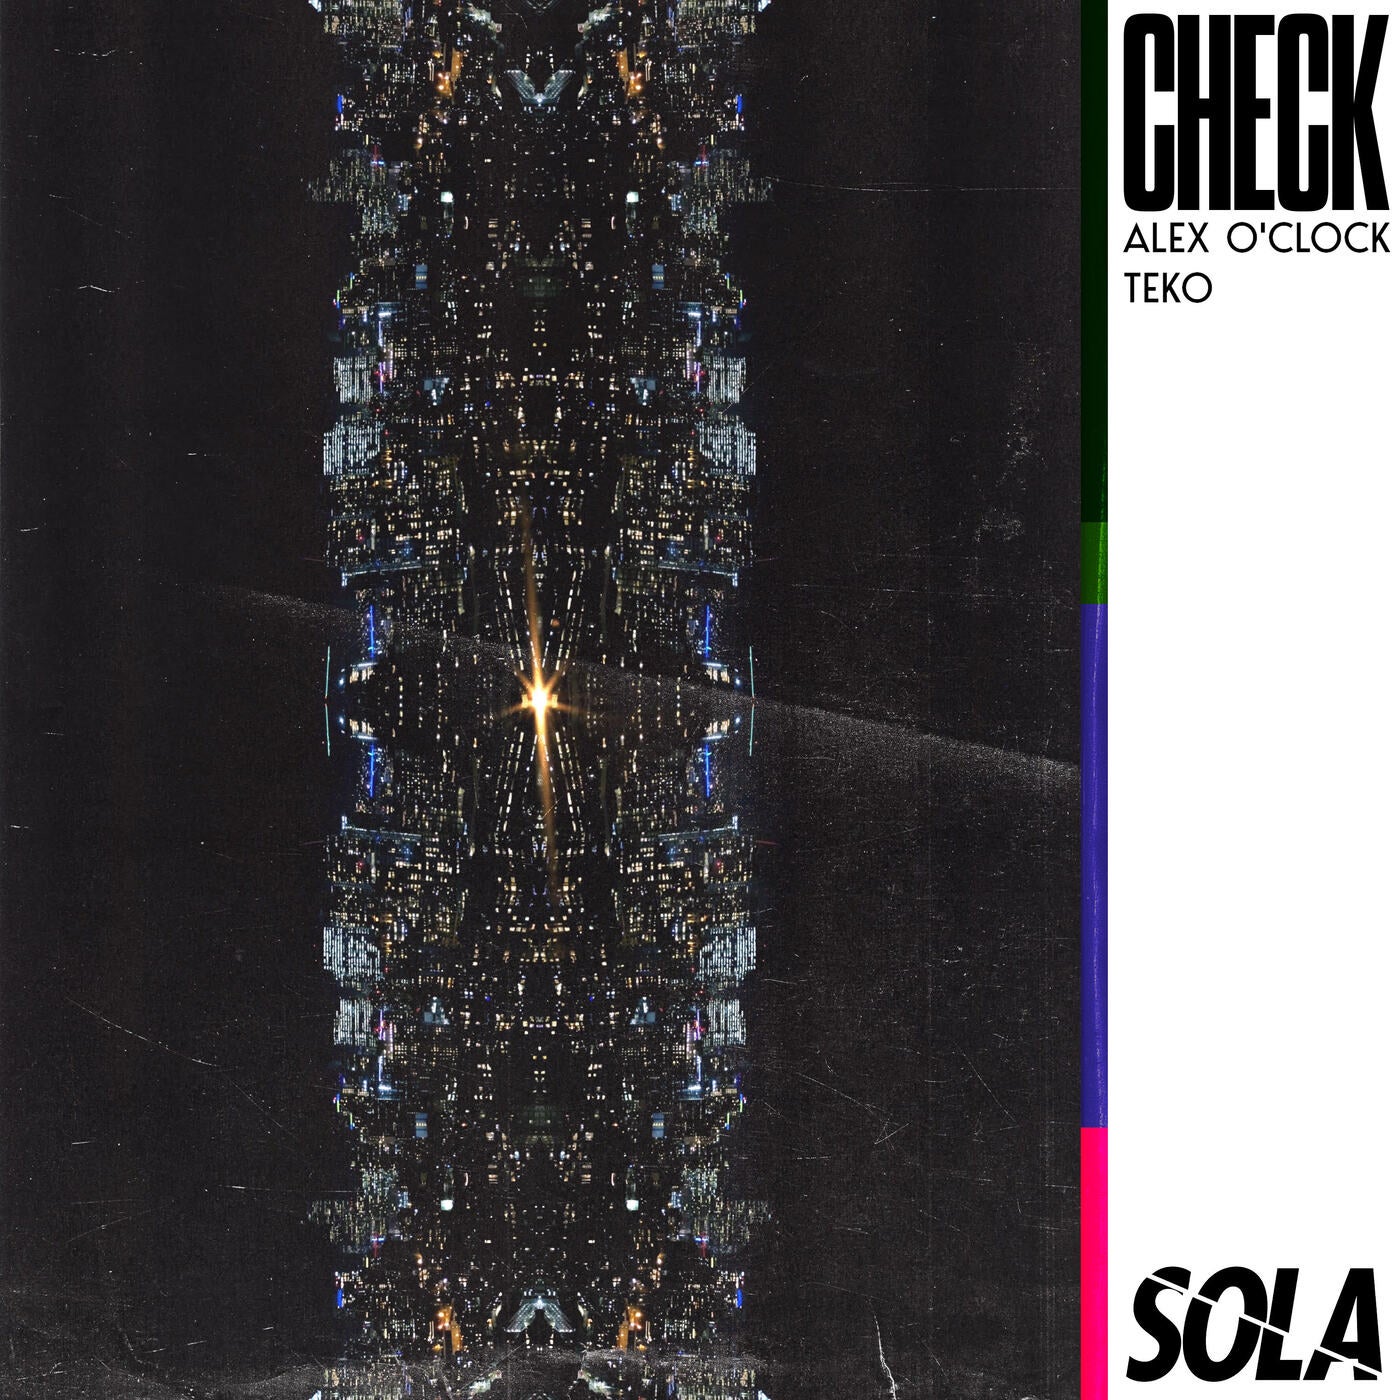 image cover: Alex O'Clock - Check on Sola